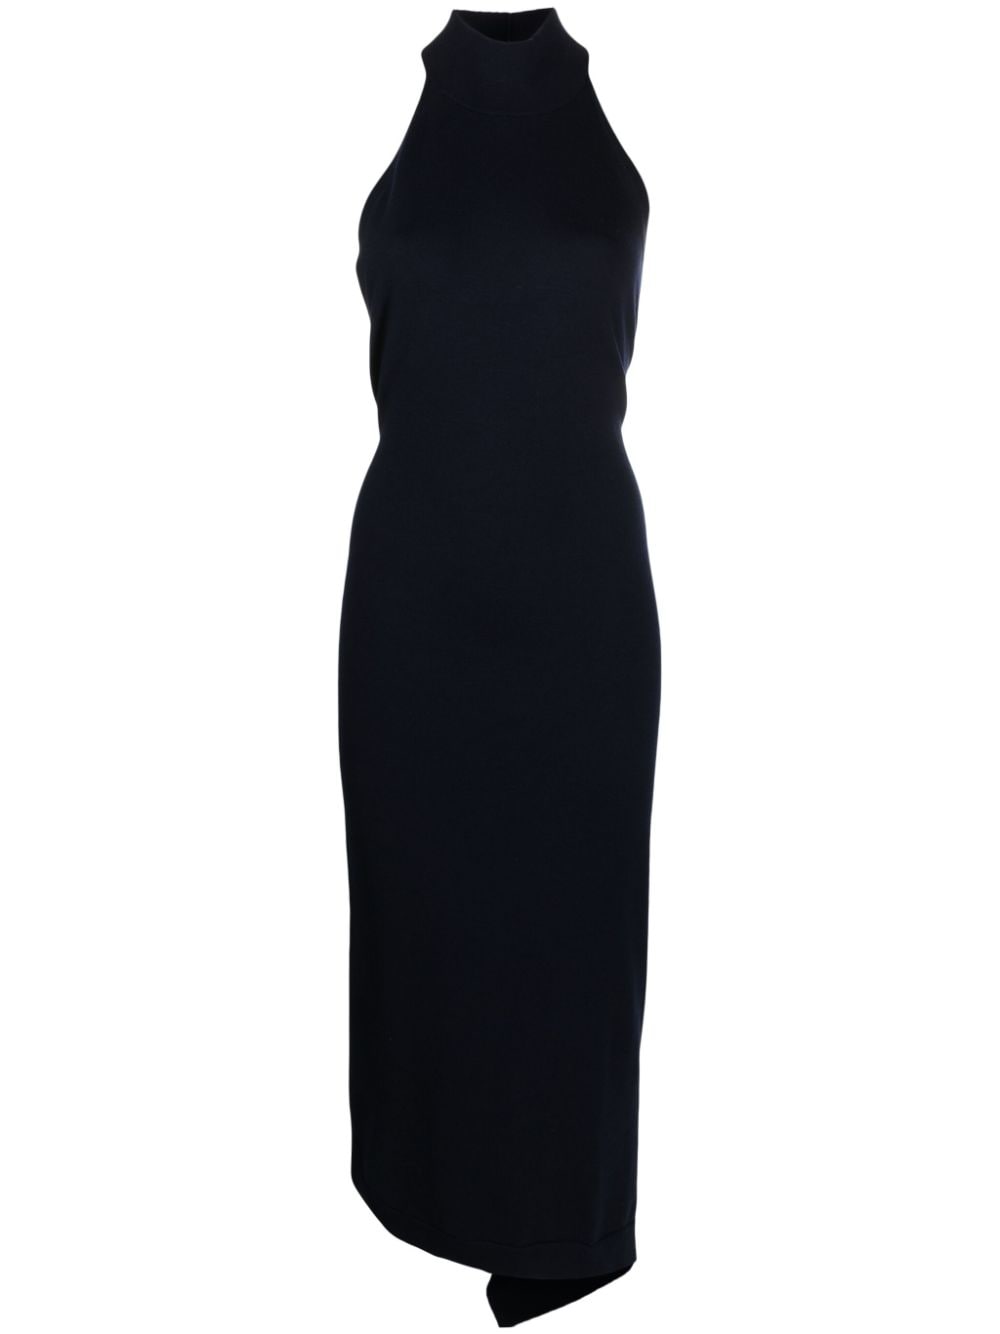 FENDI Navy Blue Wool Midi Dress for Women - Funnel-Neck Ribbed-Knit FW23 Dress